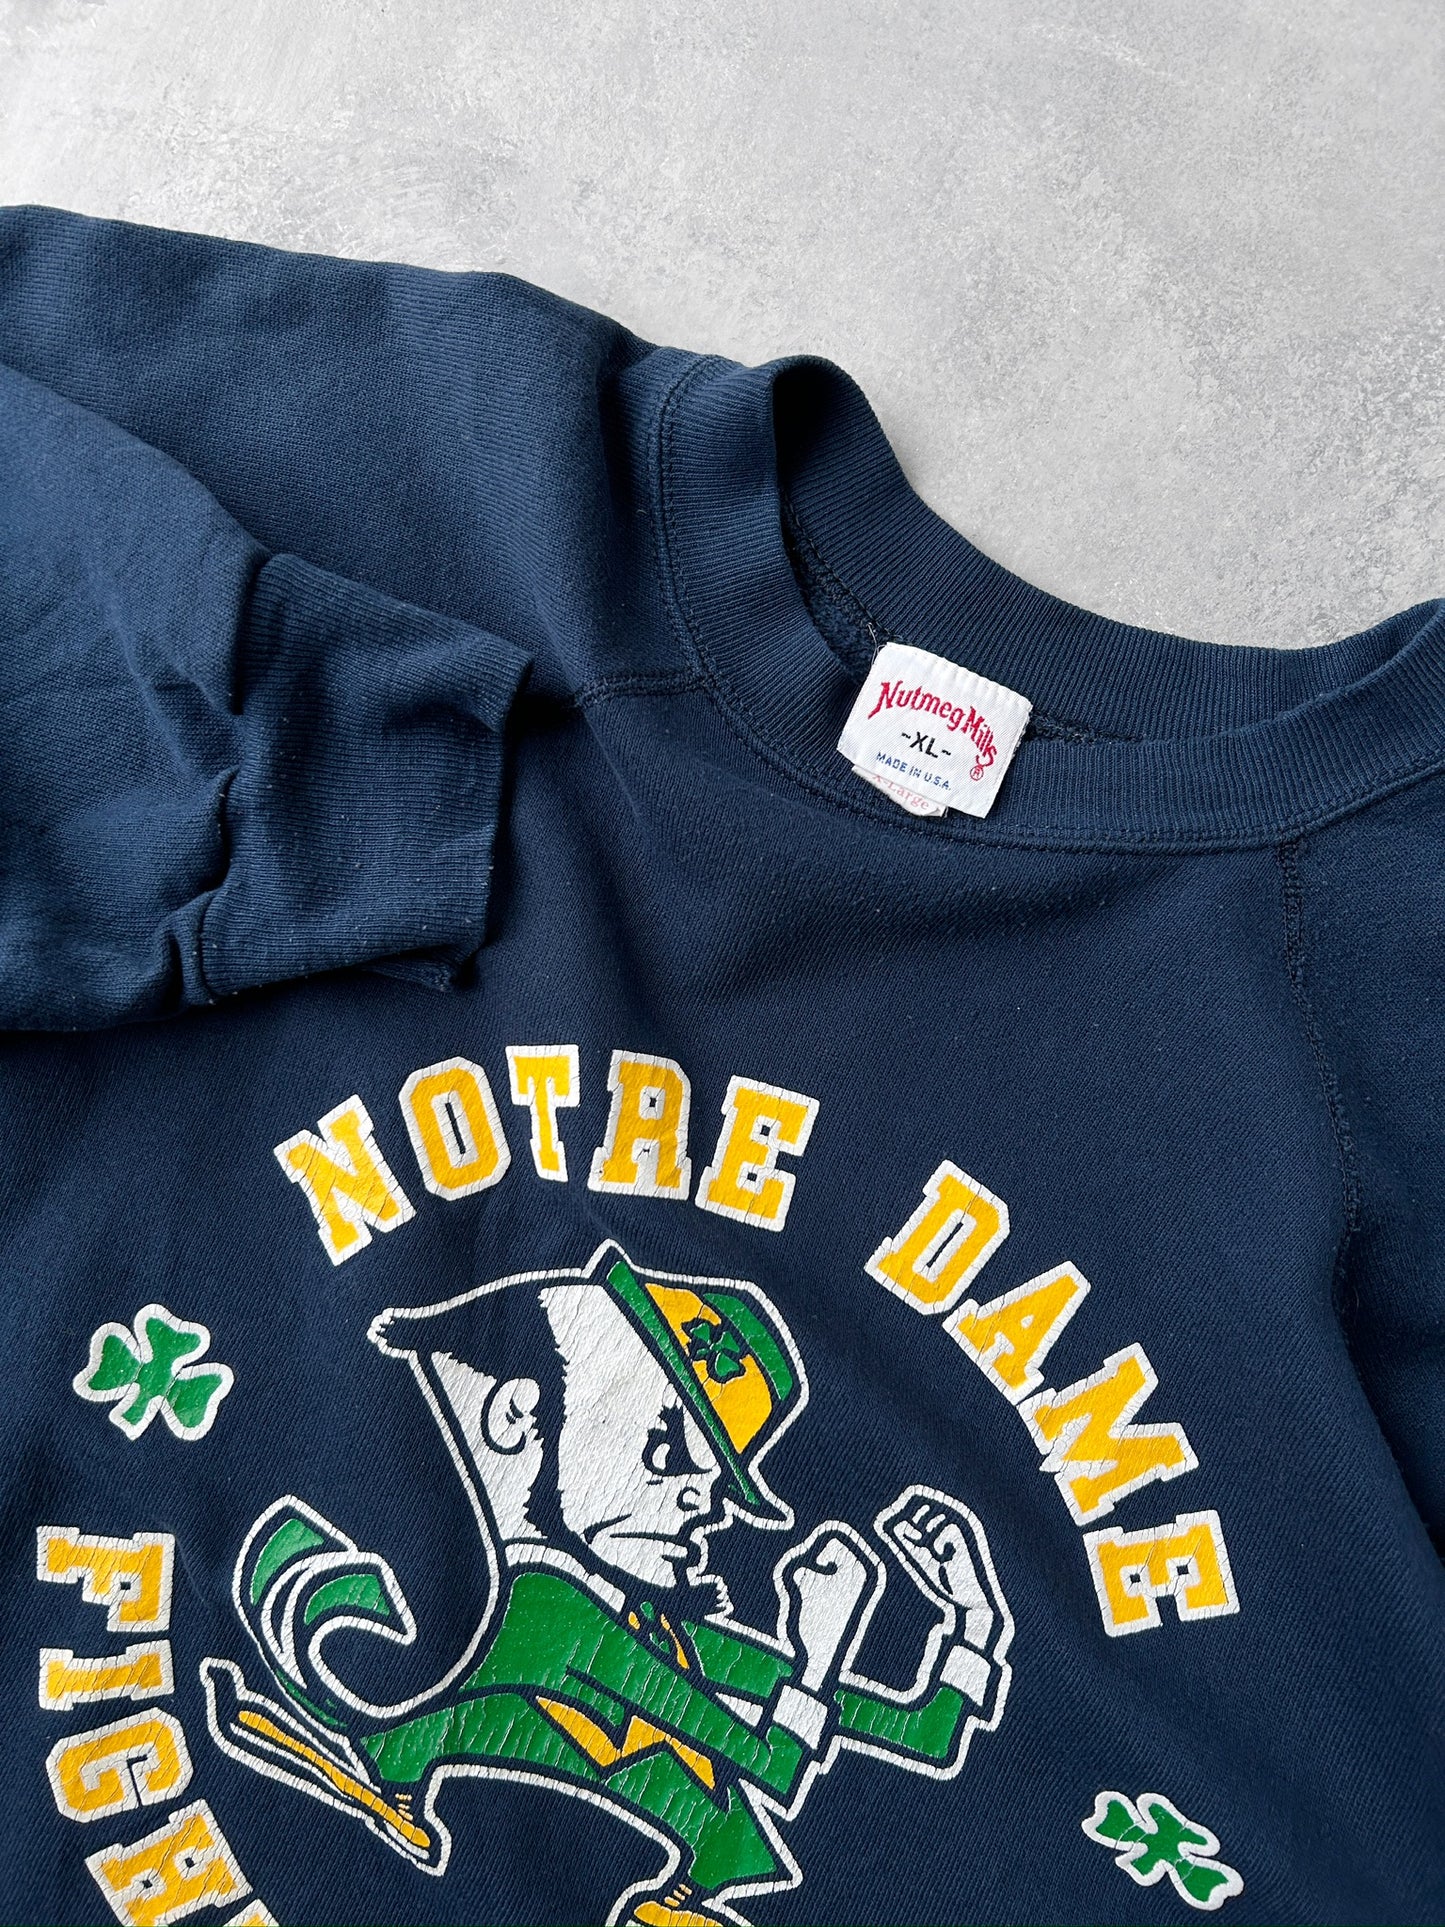 University of Notre Dame Sweatshirt 80's - XL